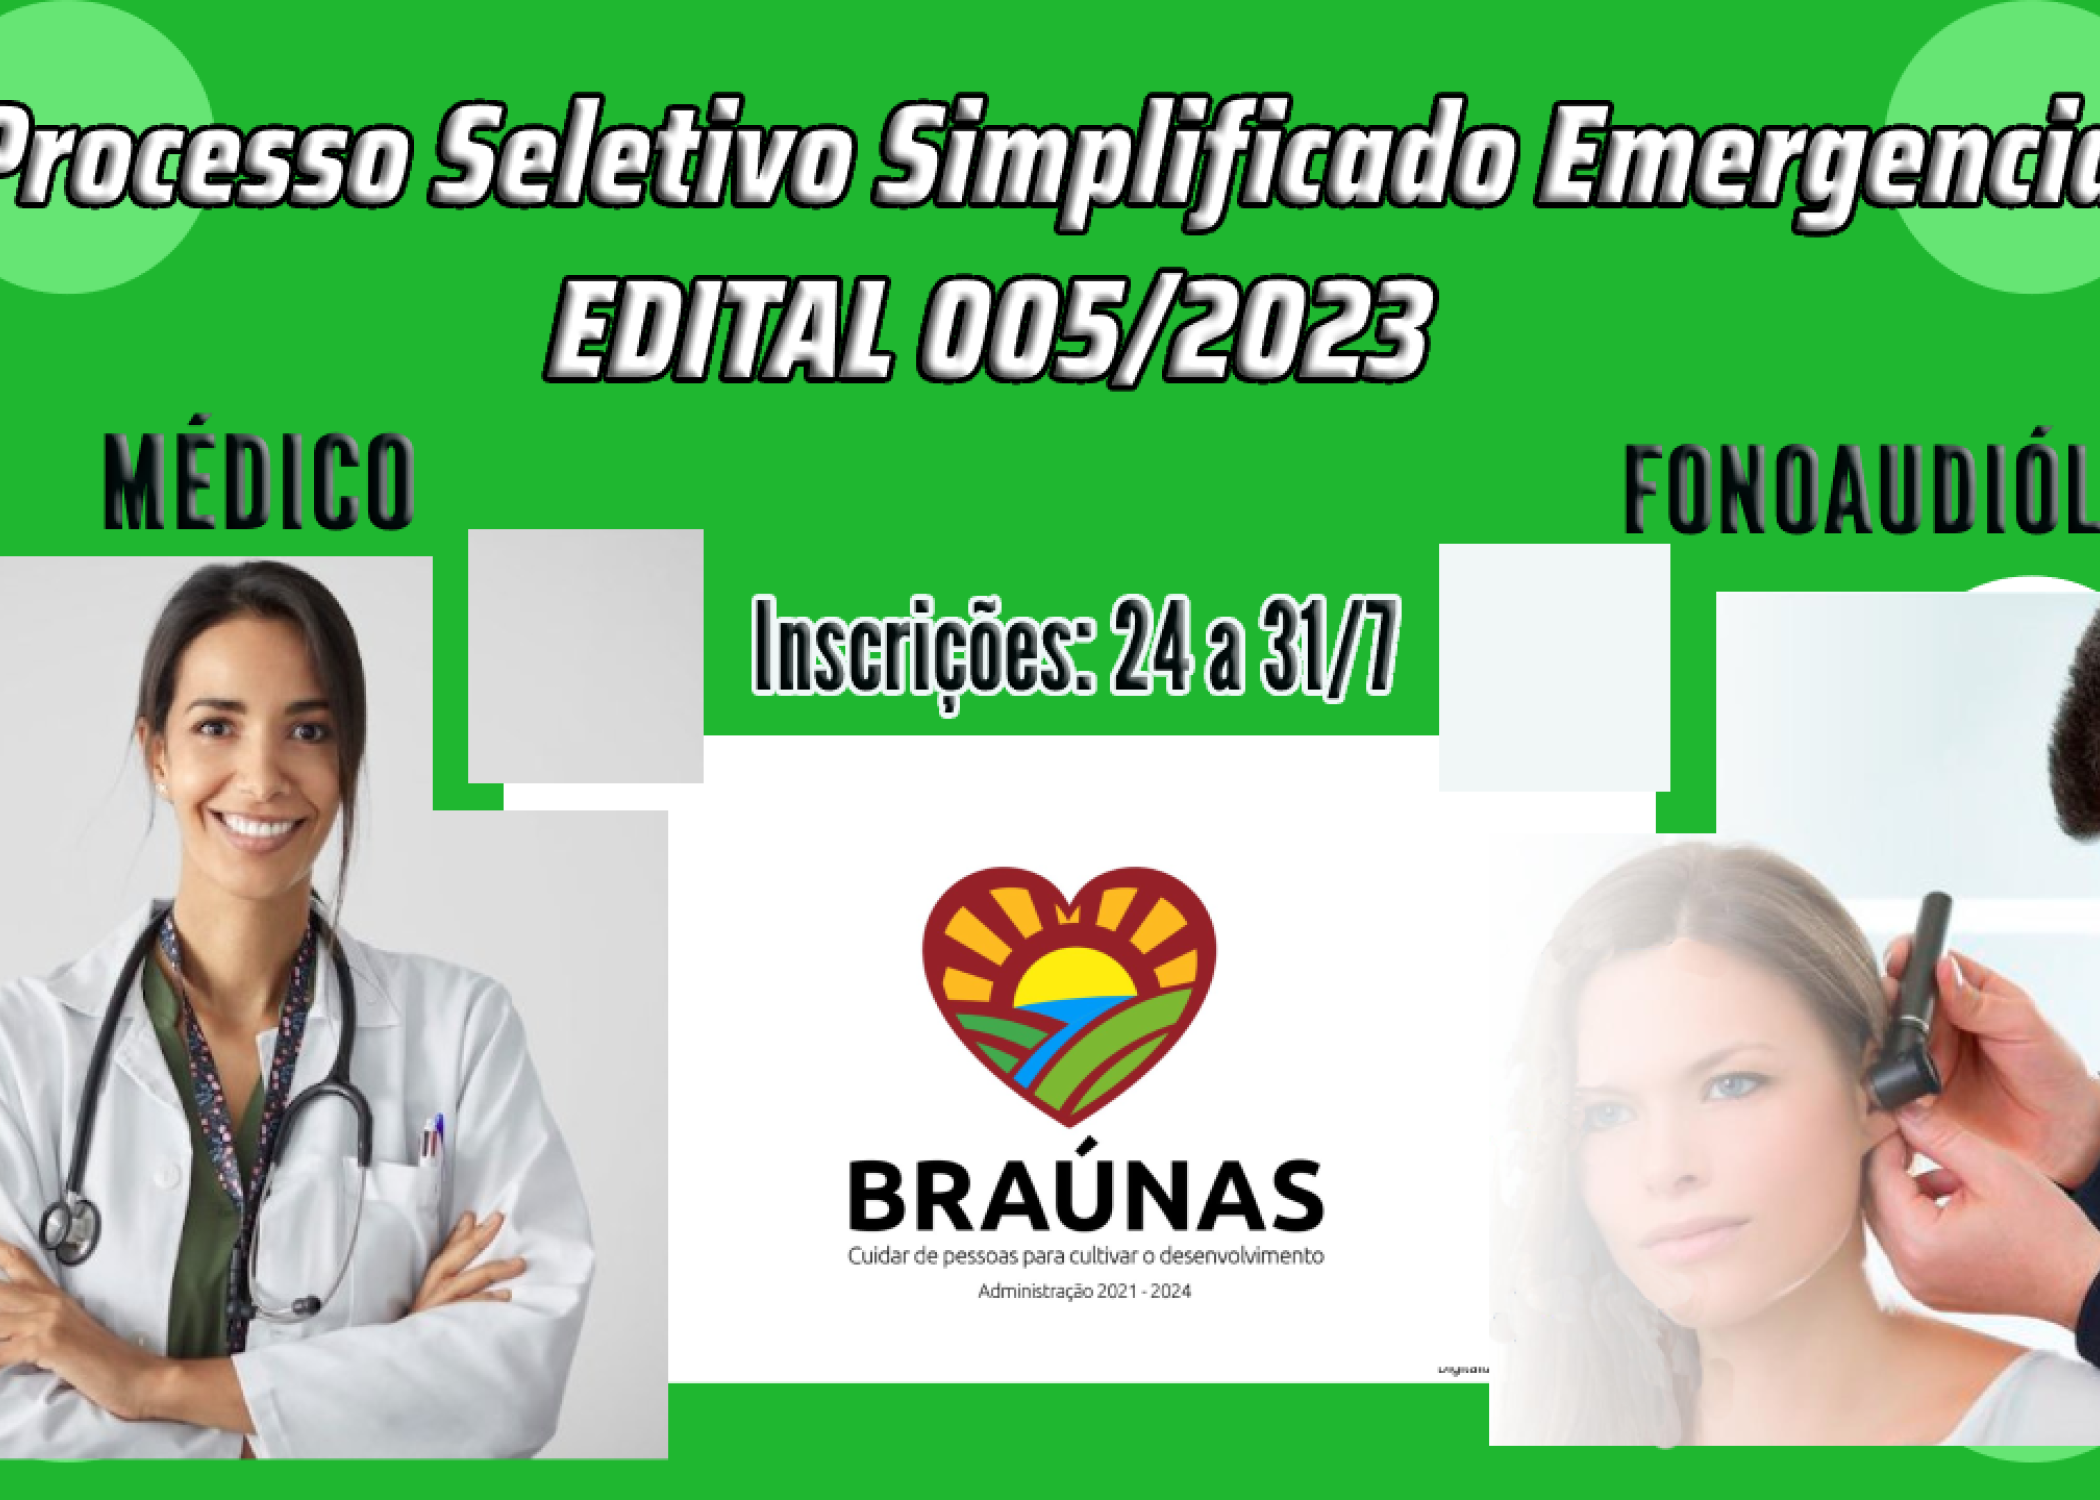 PROCESSO SELETIVO PARA MEDICO E FONOAUDIOLOGO, EDITAL 005 2023